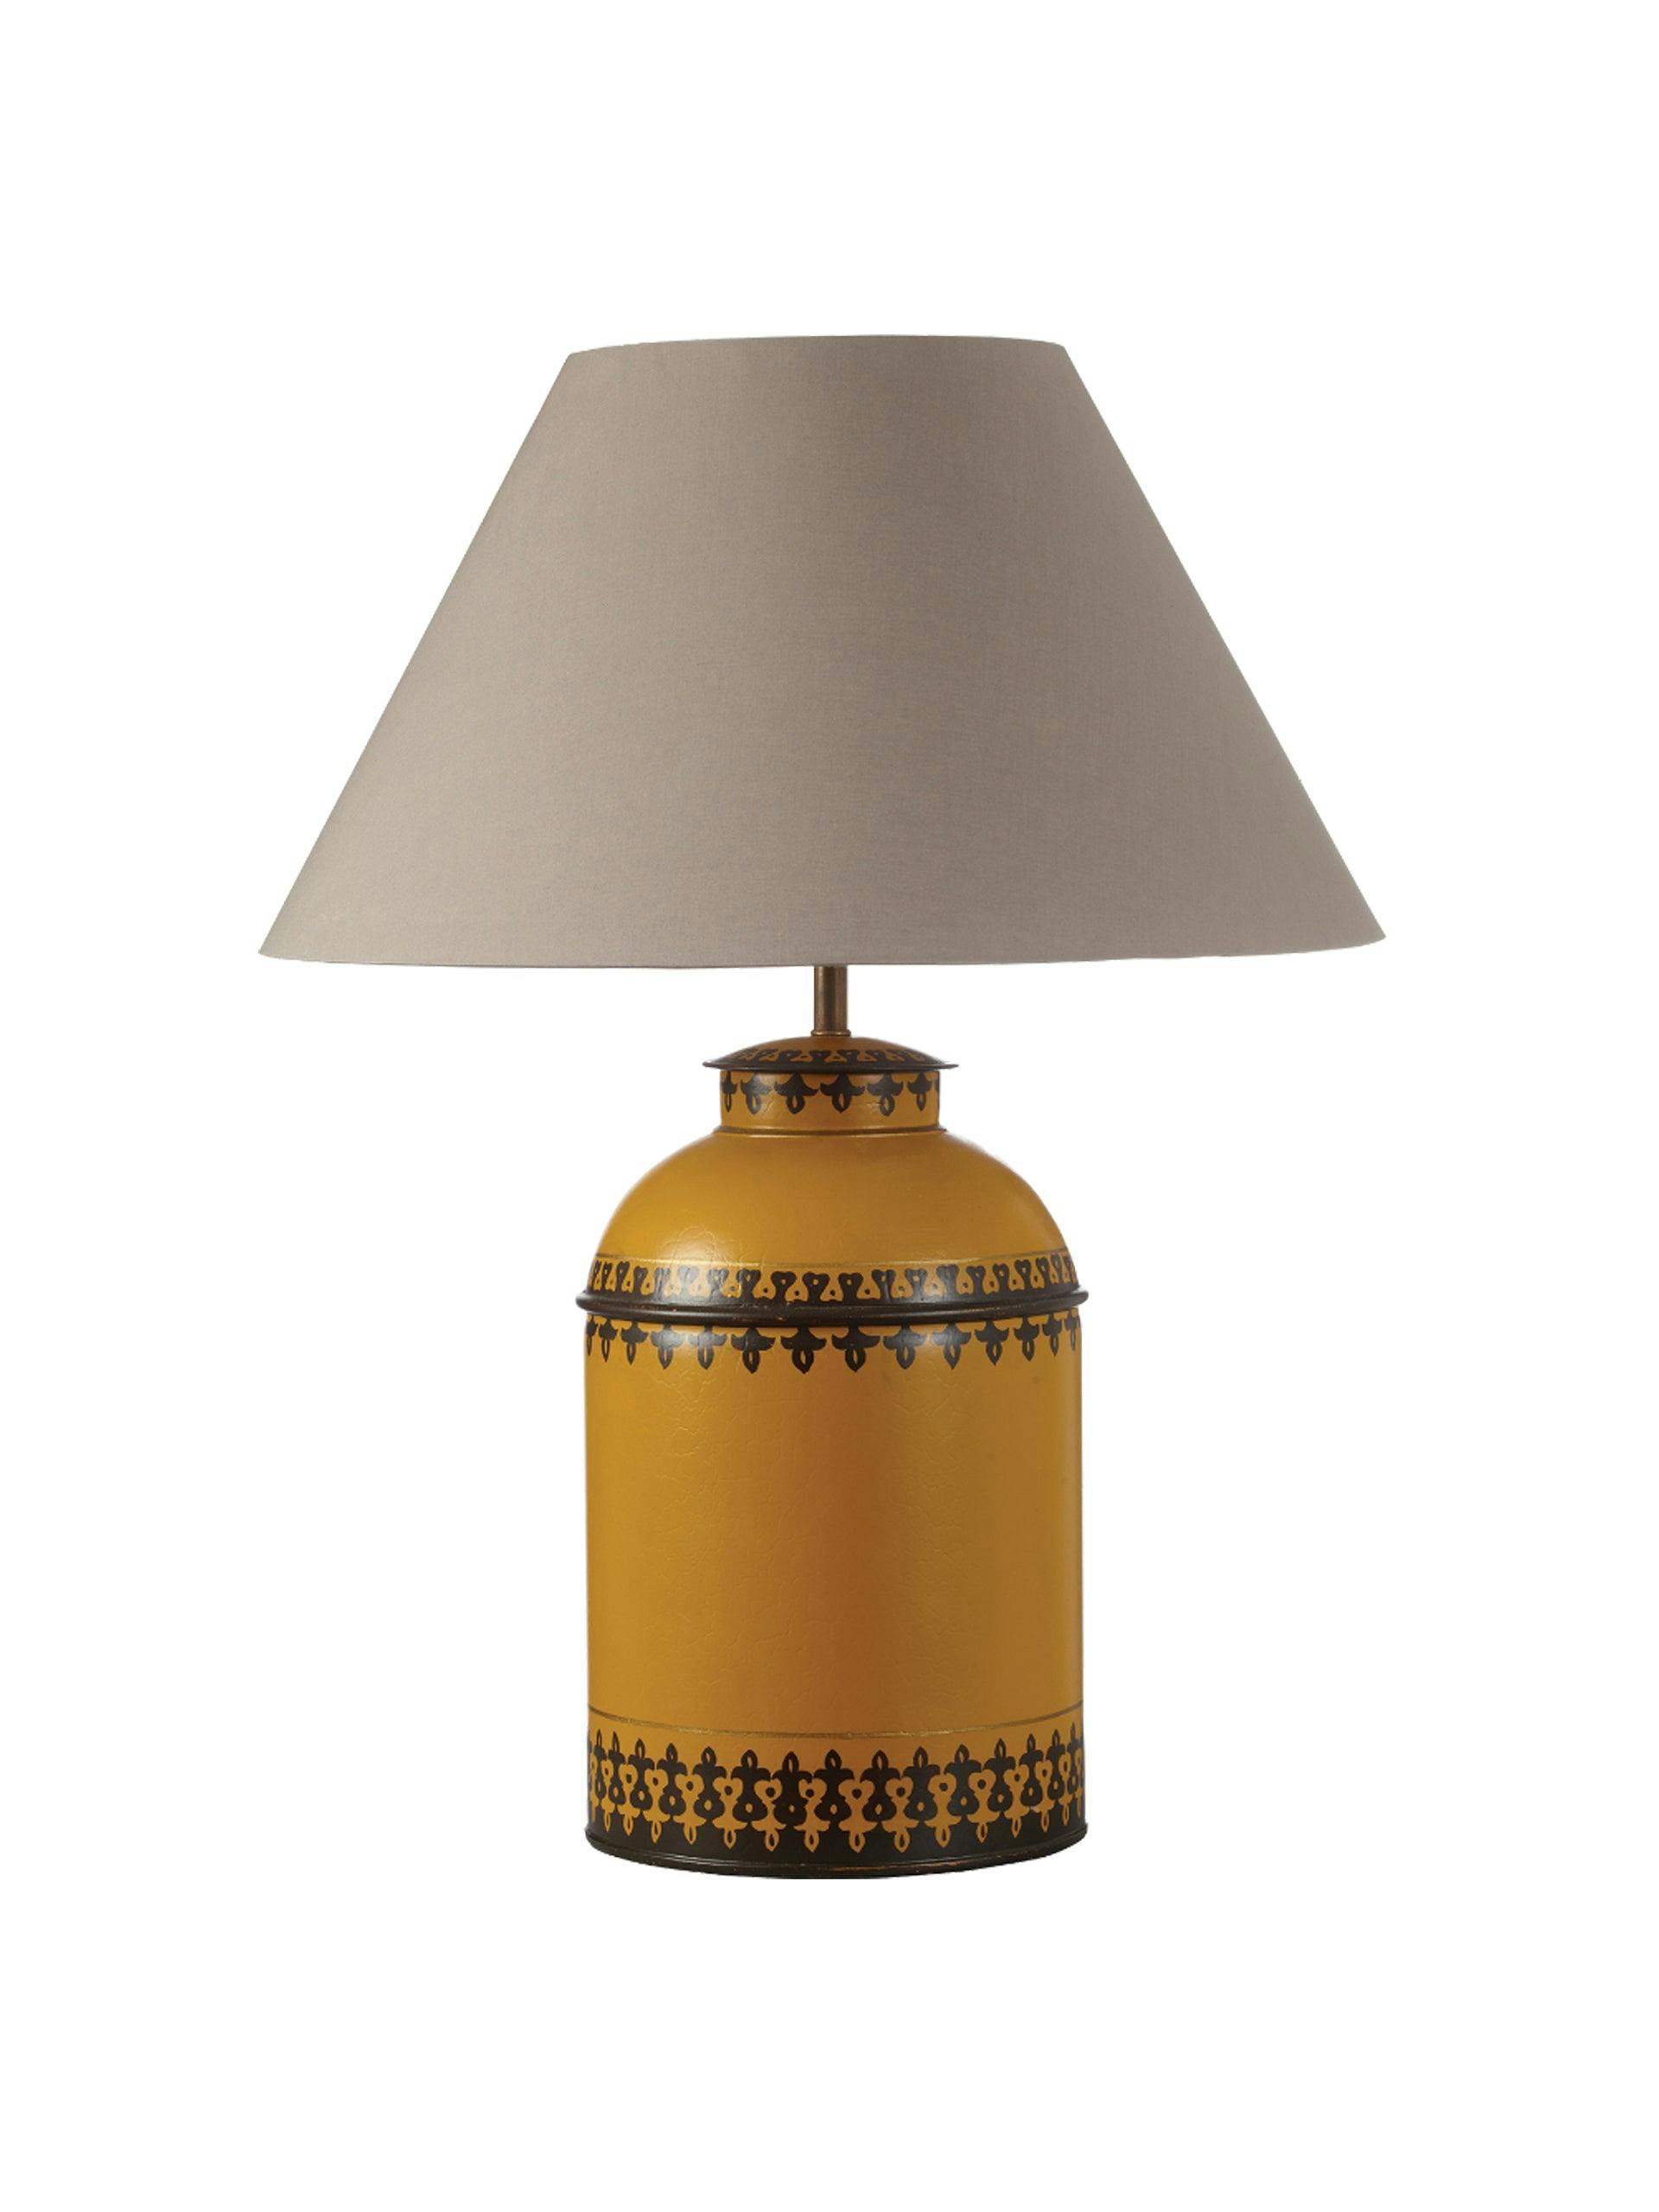 Handpainted yellow table lamp